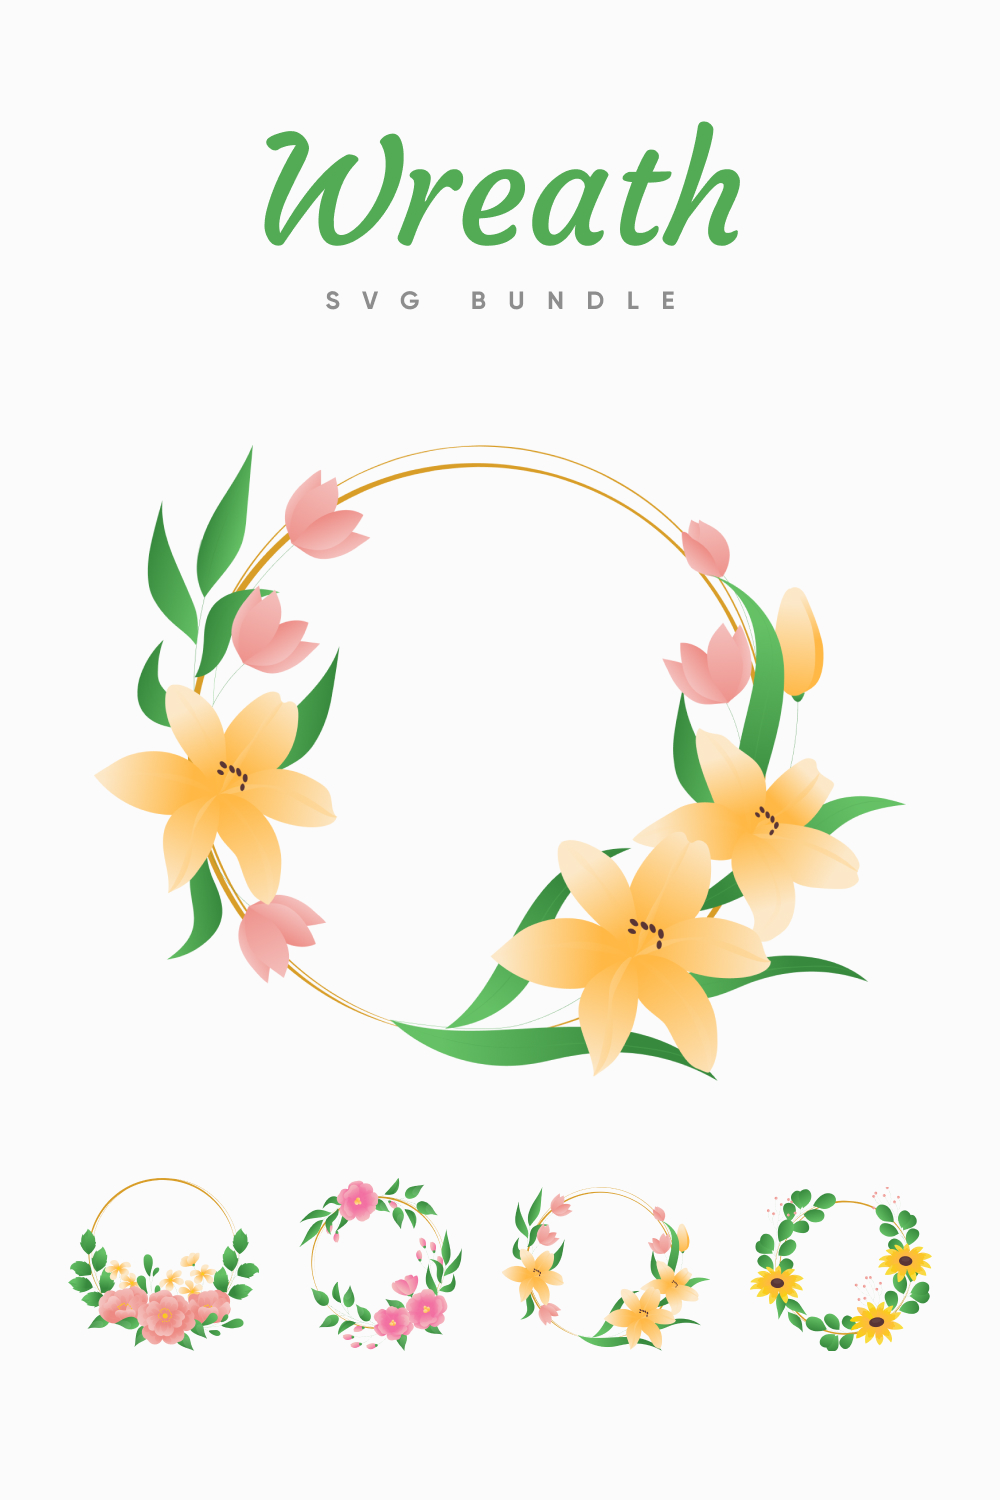 Wreath SVG Files Bundle pintarest.